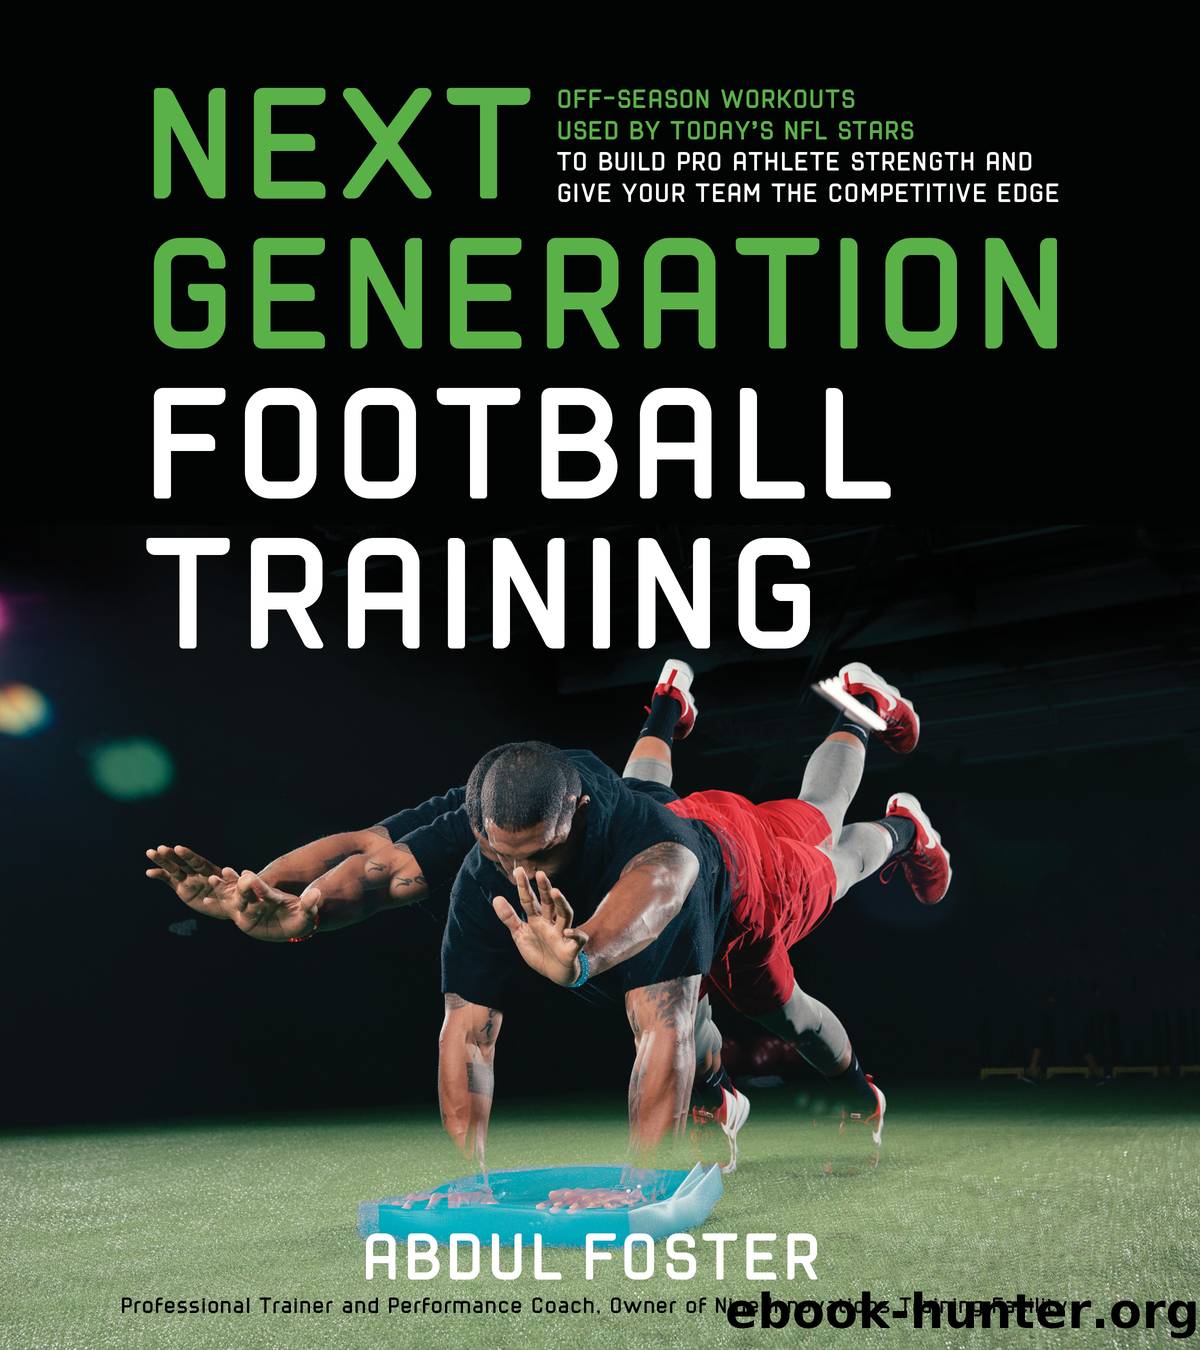 Next Generation Football Training by abdul foster